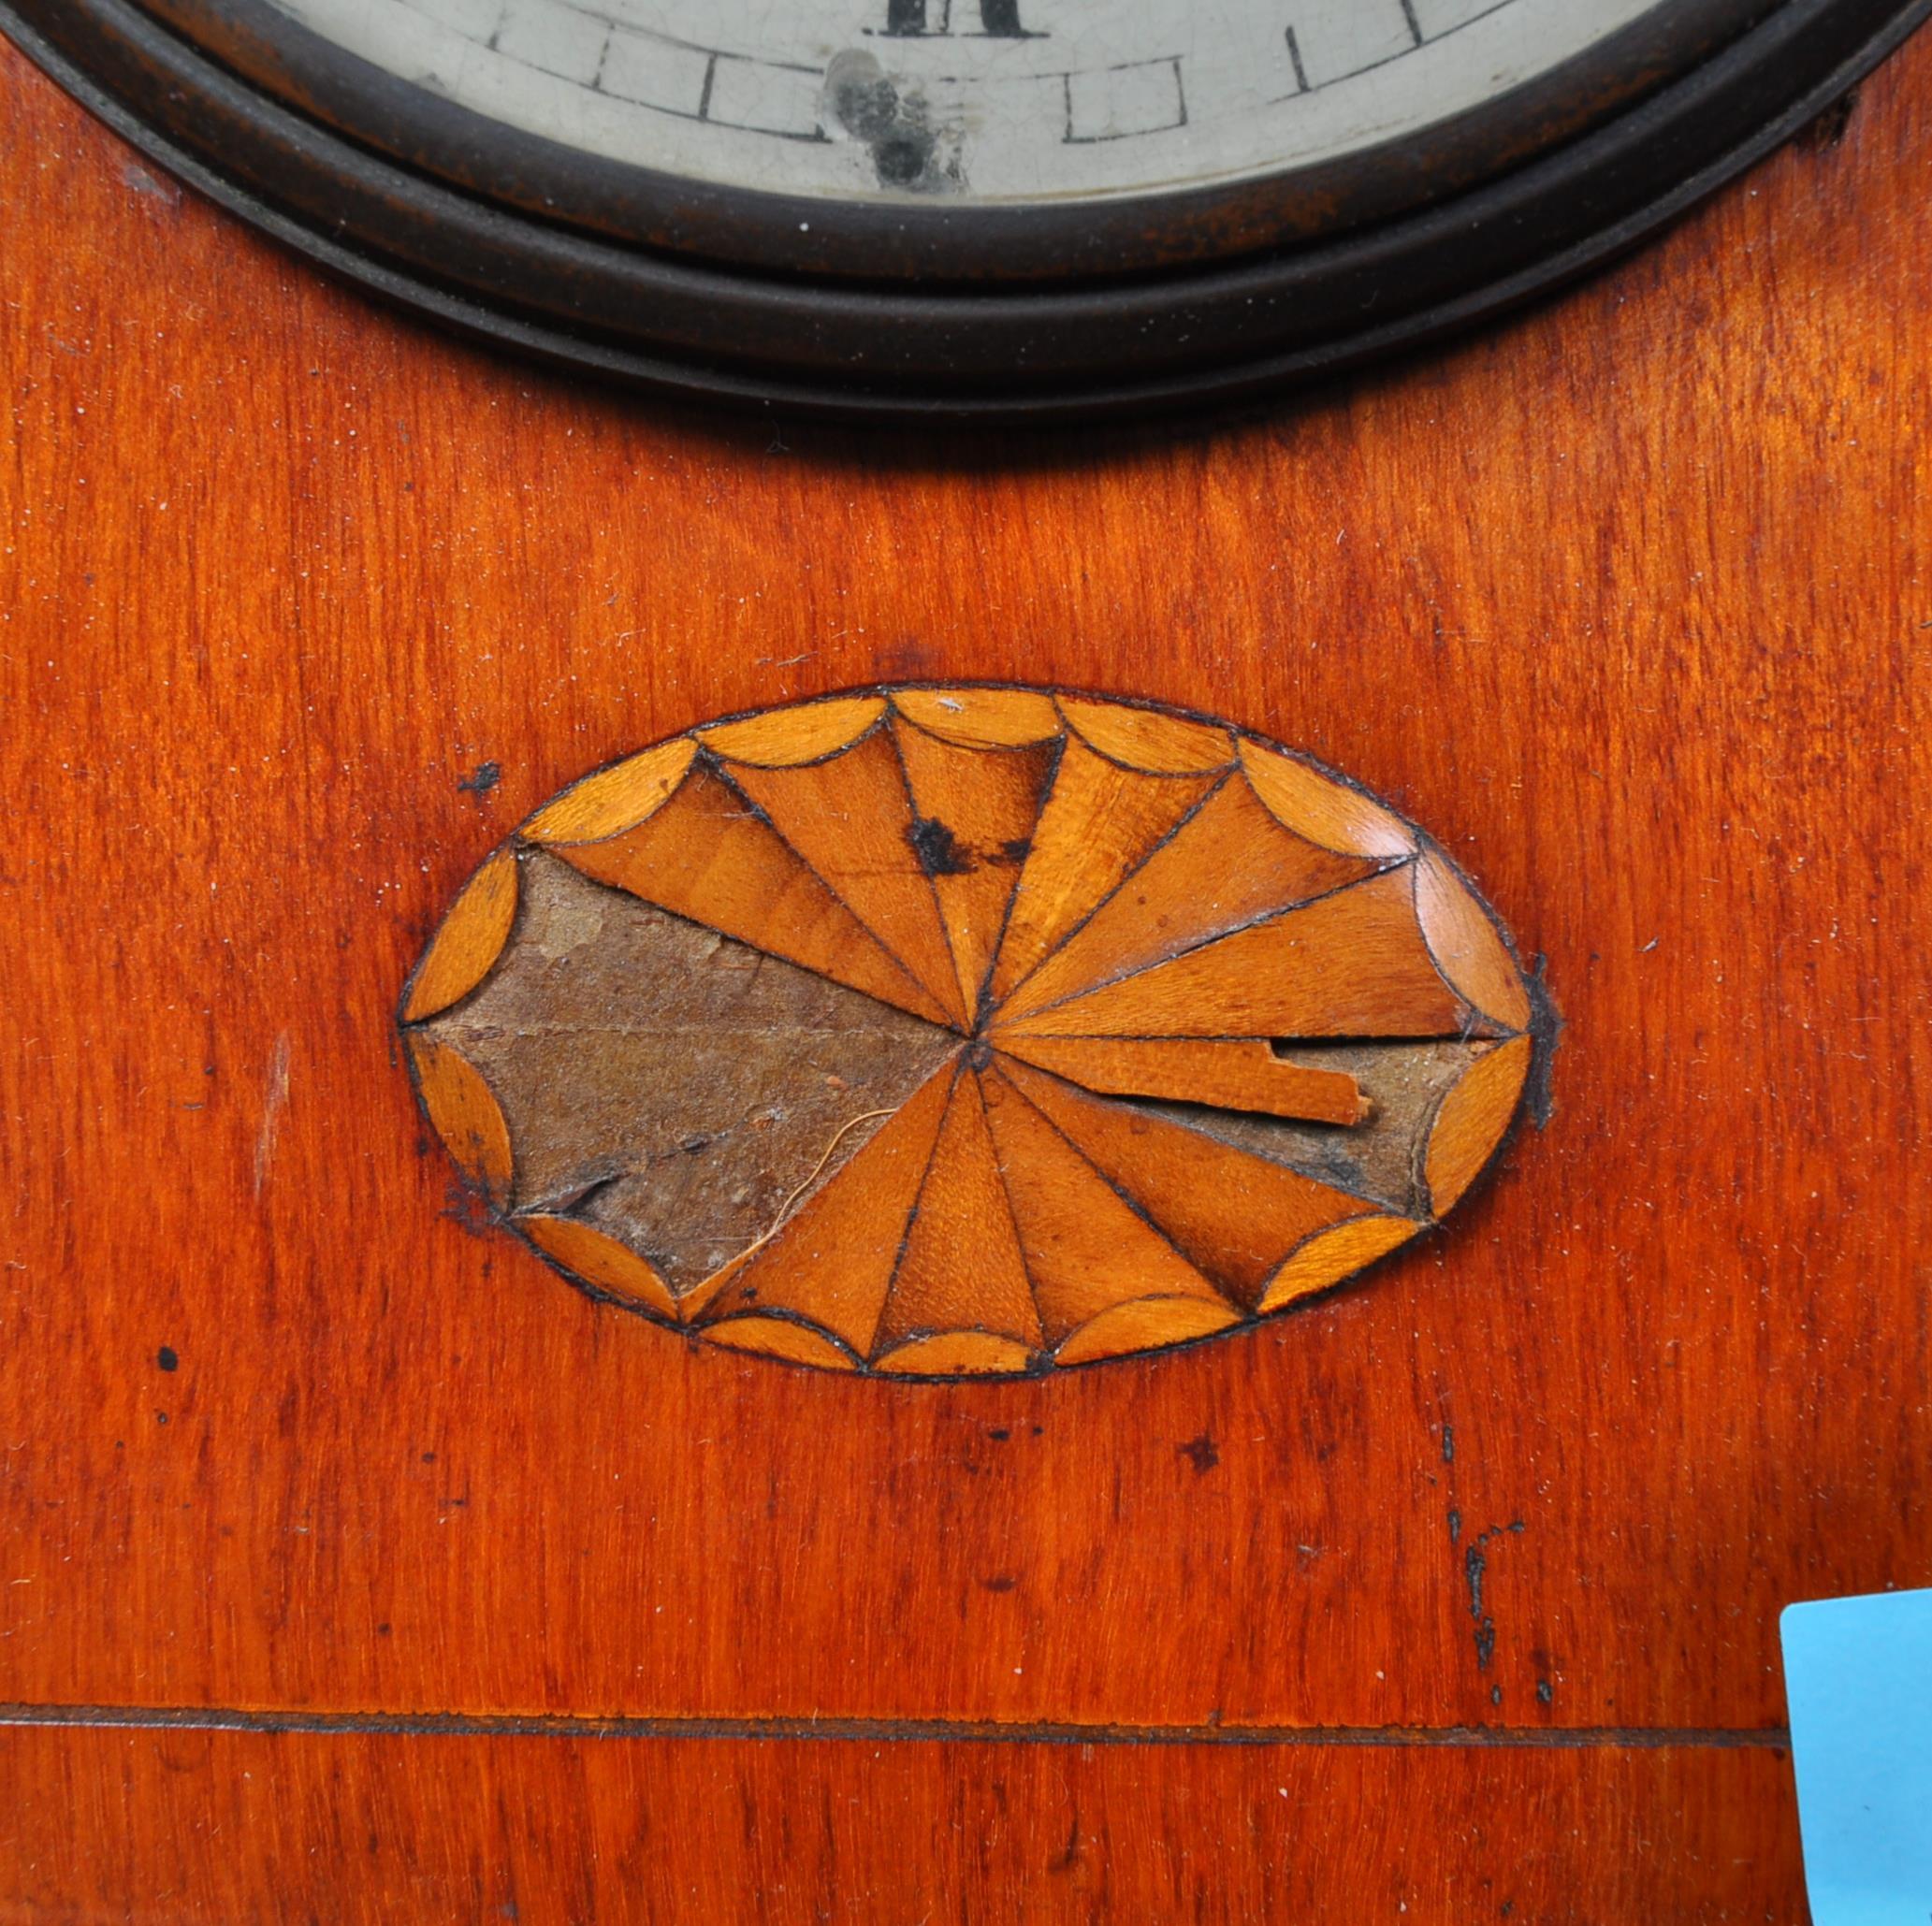 EDWARDIAN INLAID CIRCA. 1900 8-DAY MANTEL CLOCK - Image 3 of 4